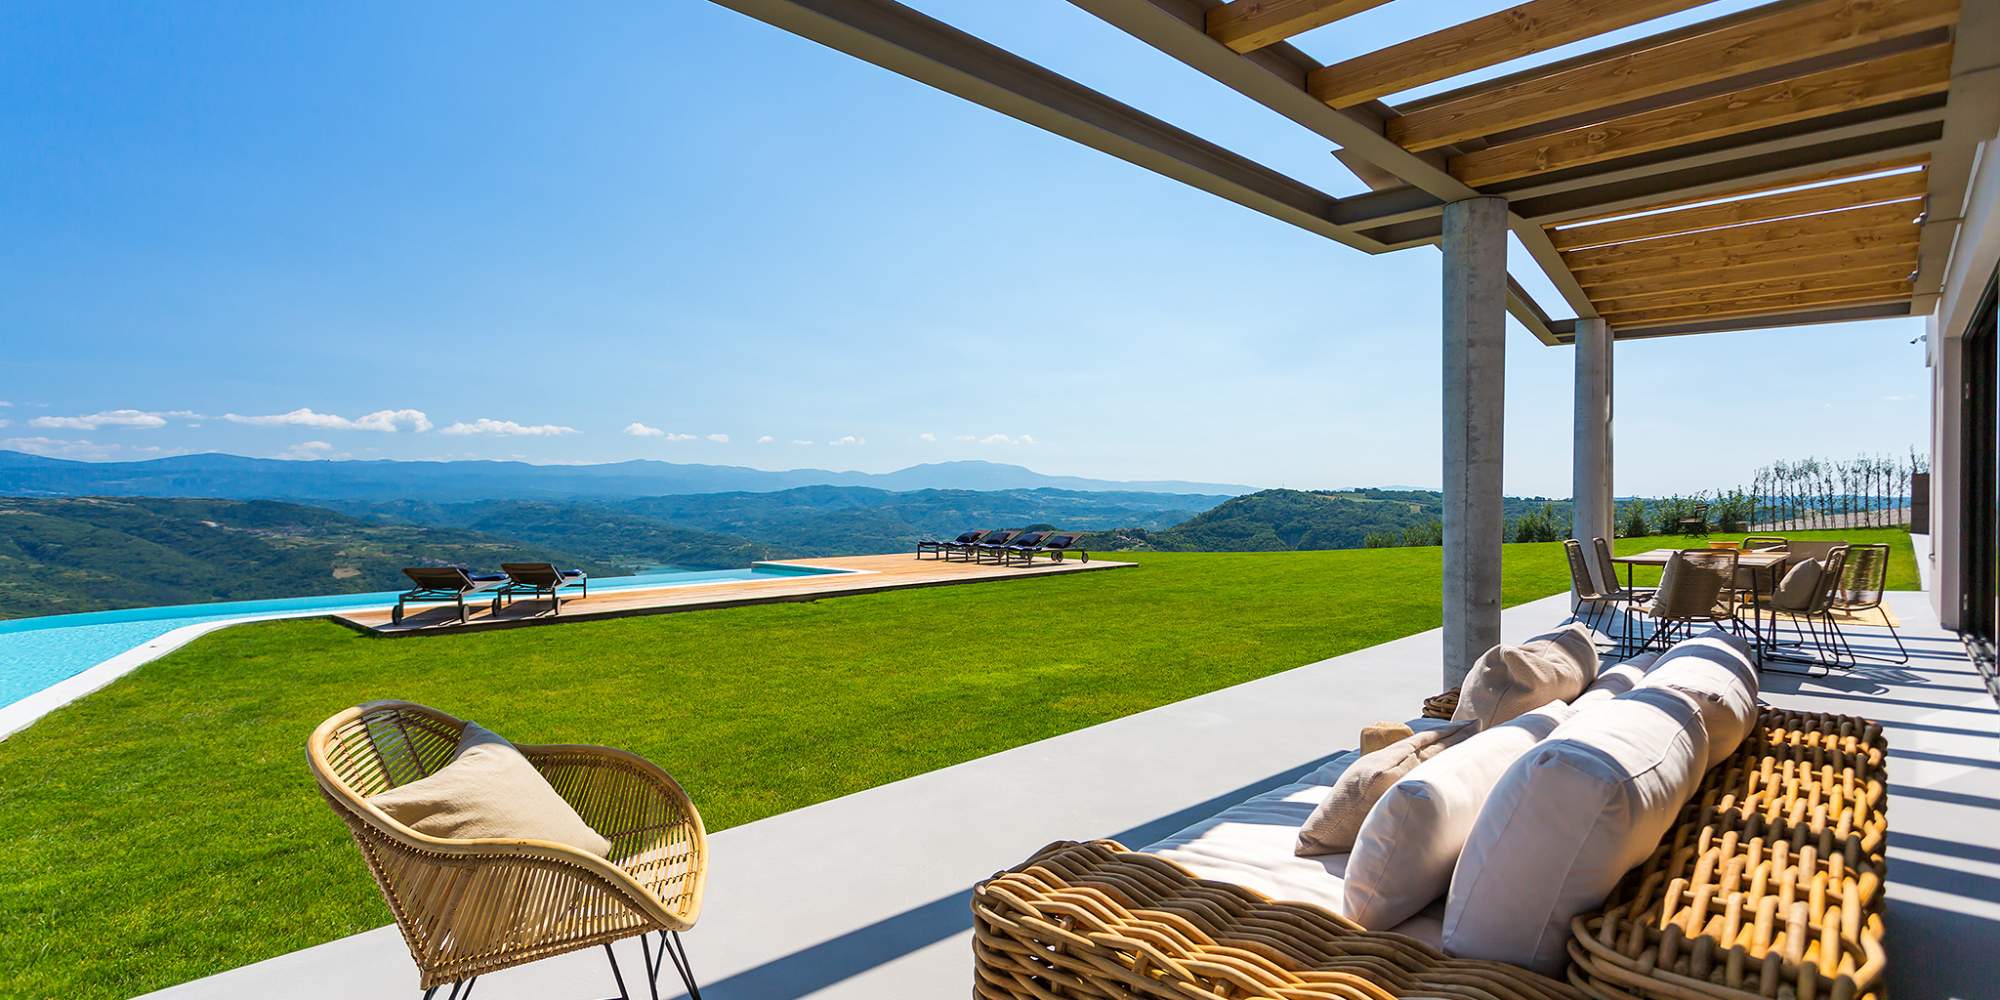 Luxury villa with breathtaking view